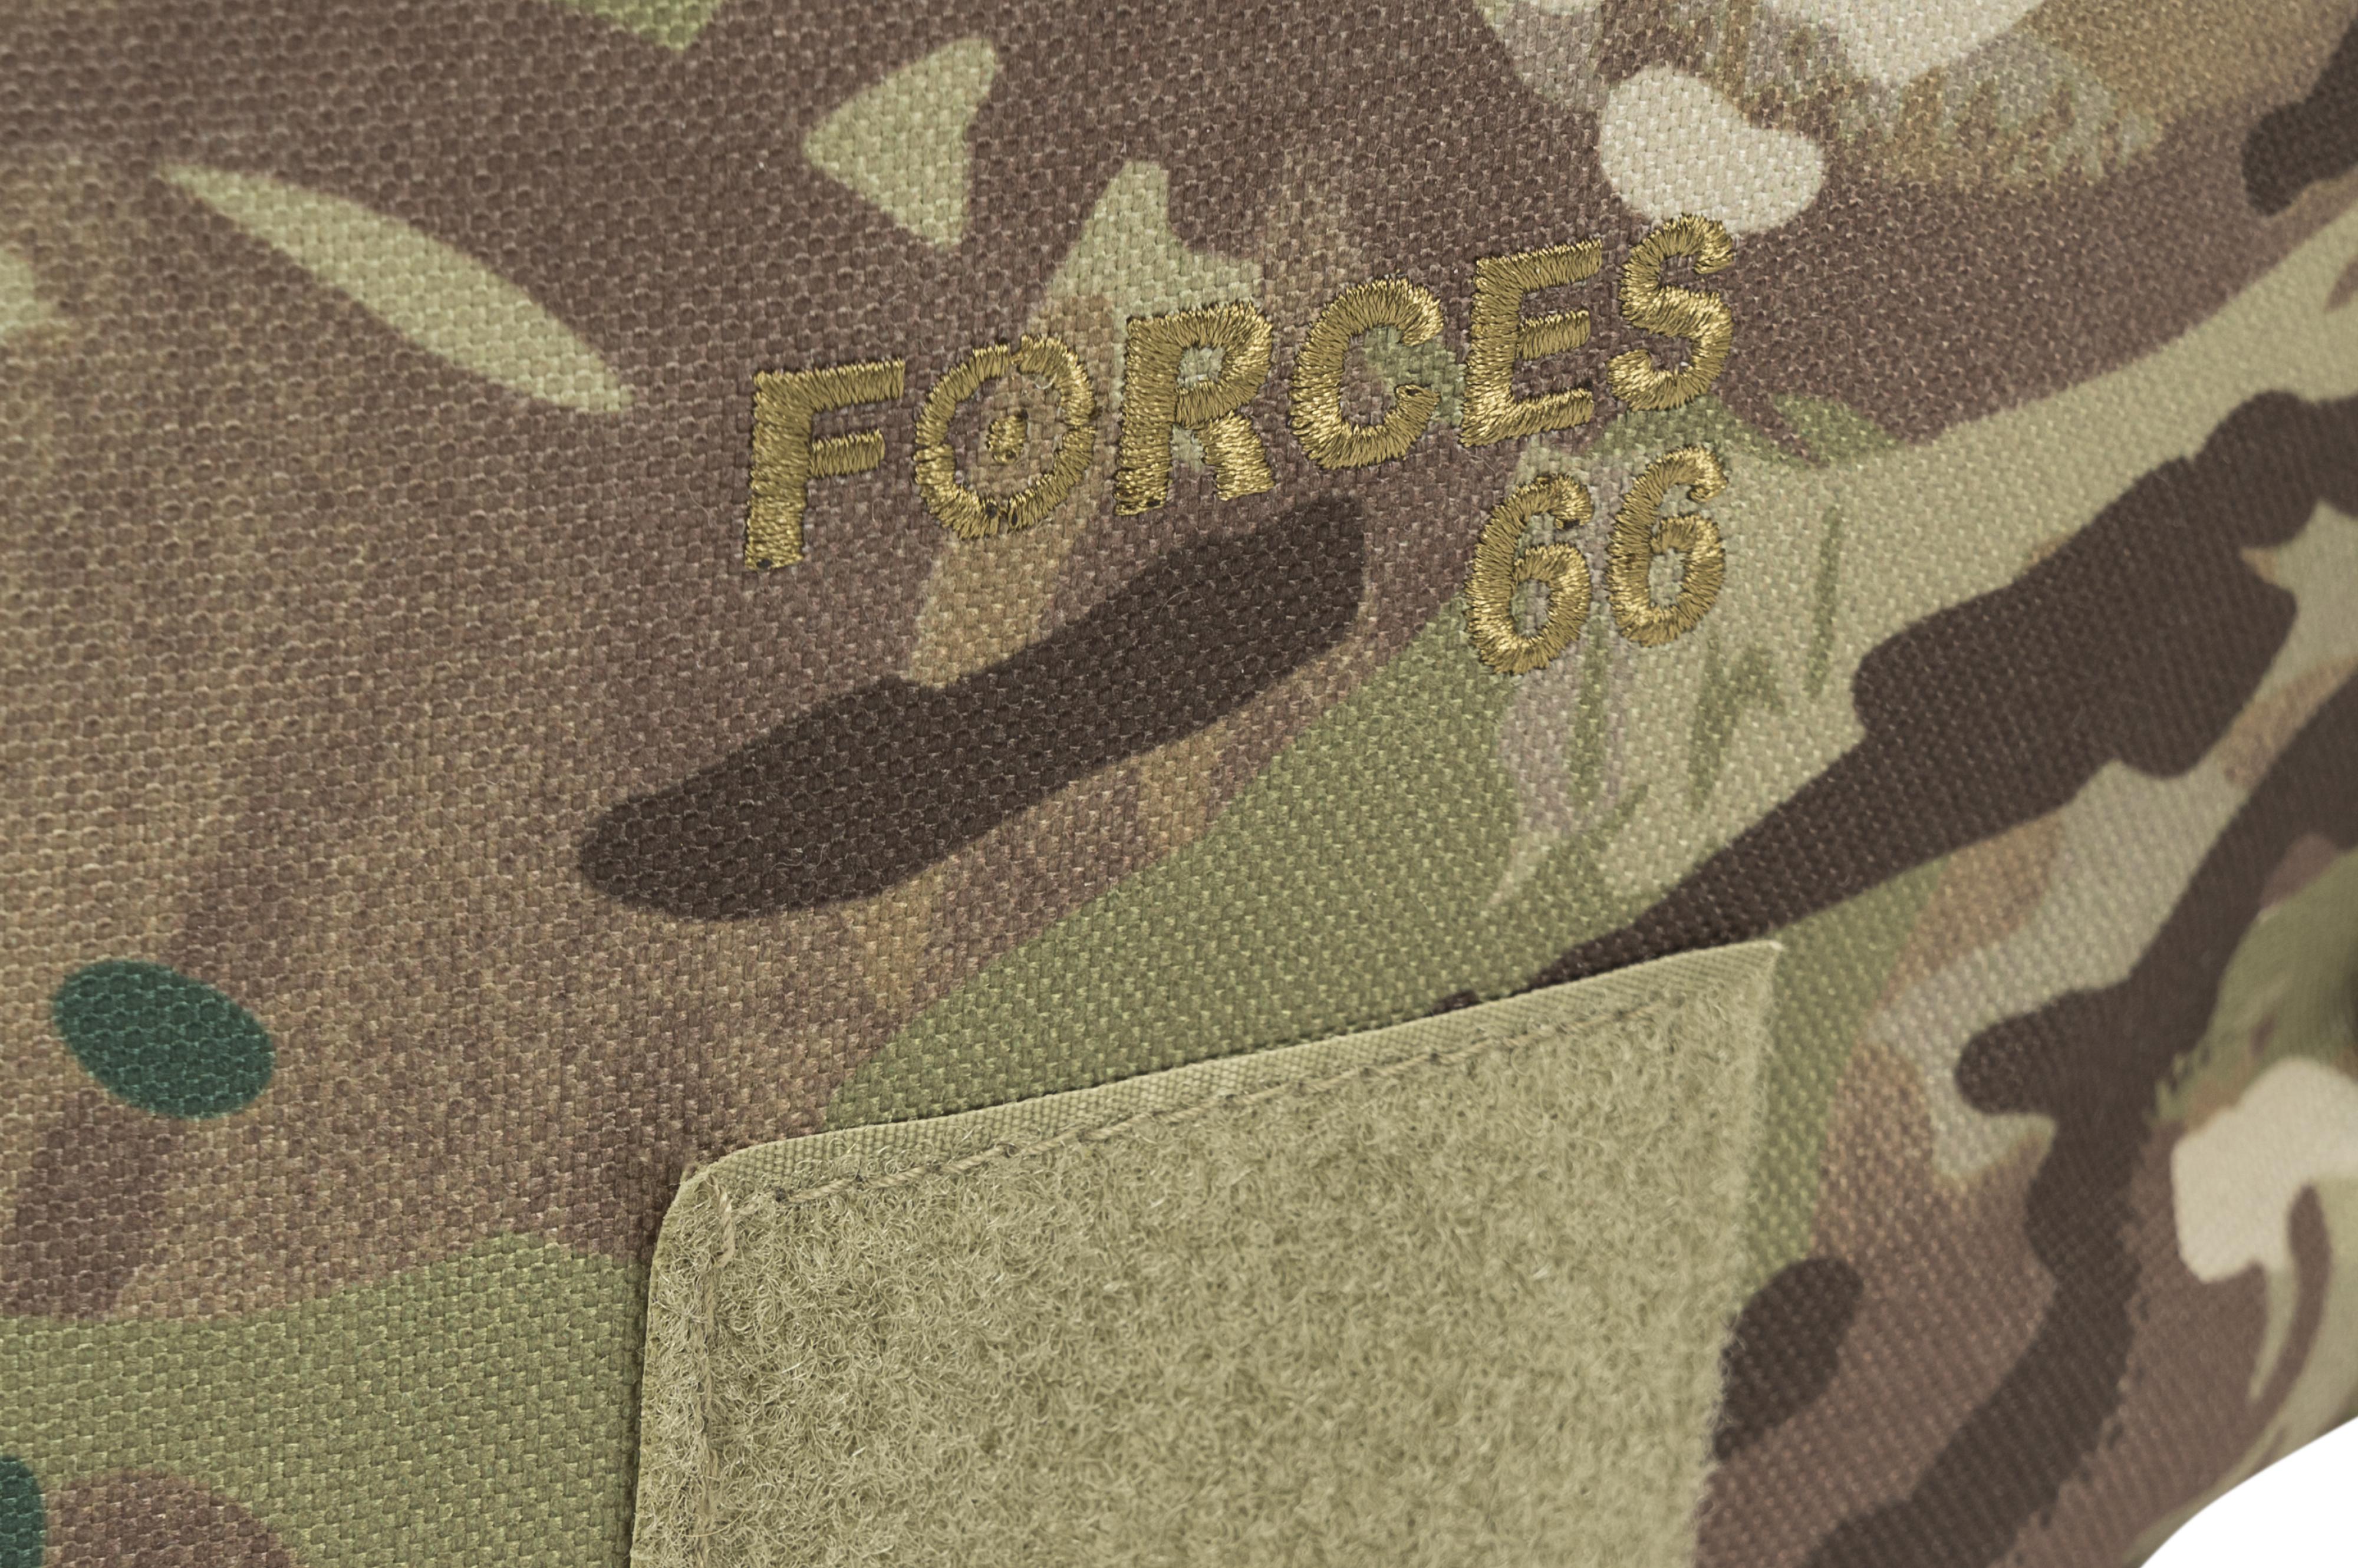 Forces 66